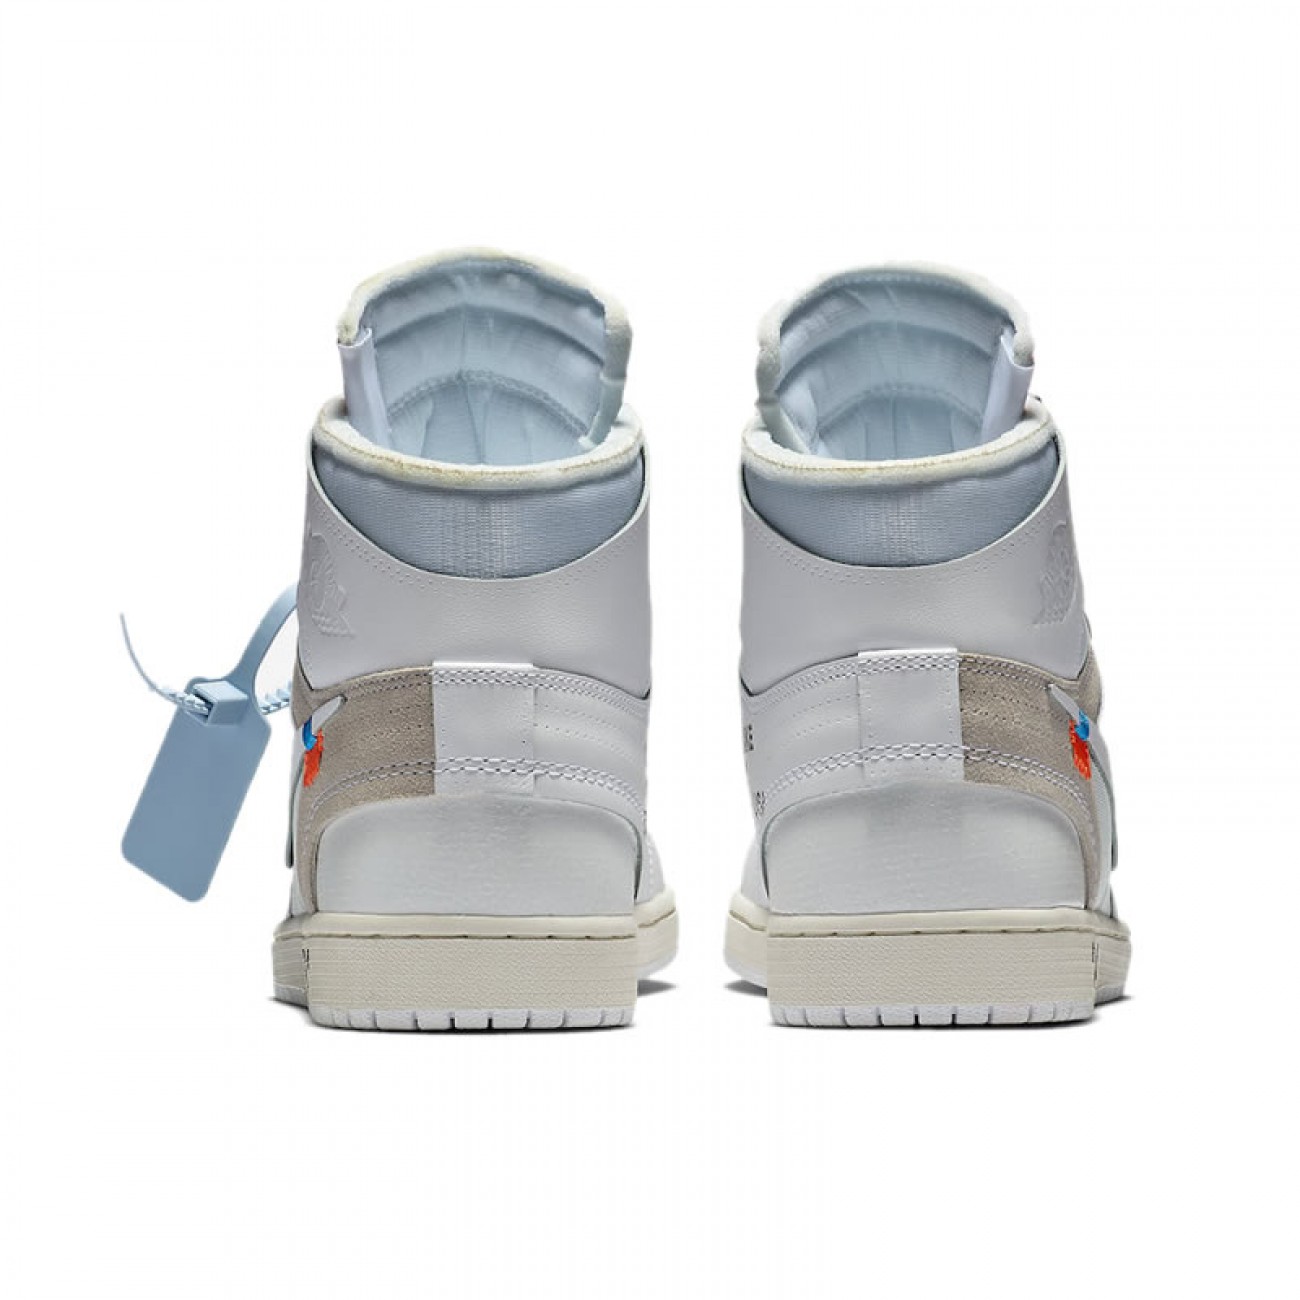 Off-White x Air Jordan 1 "White" AQ0818-100 Release Date